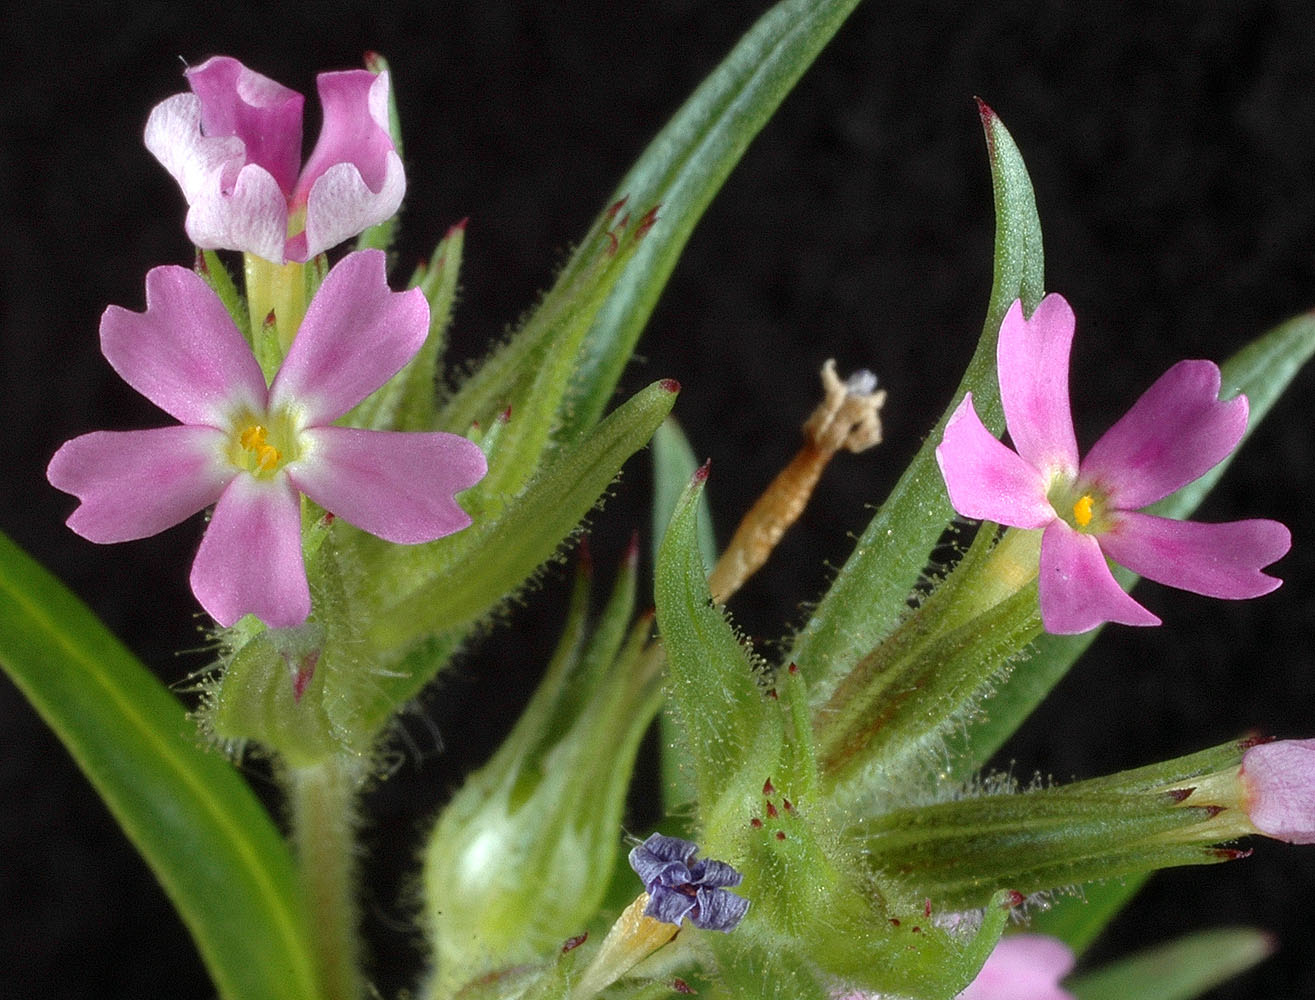 Flora of Eastern Washington Image: Microsteris gracilis